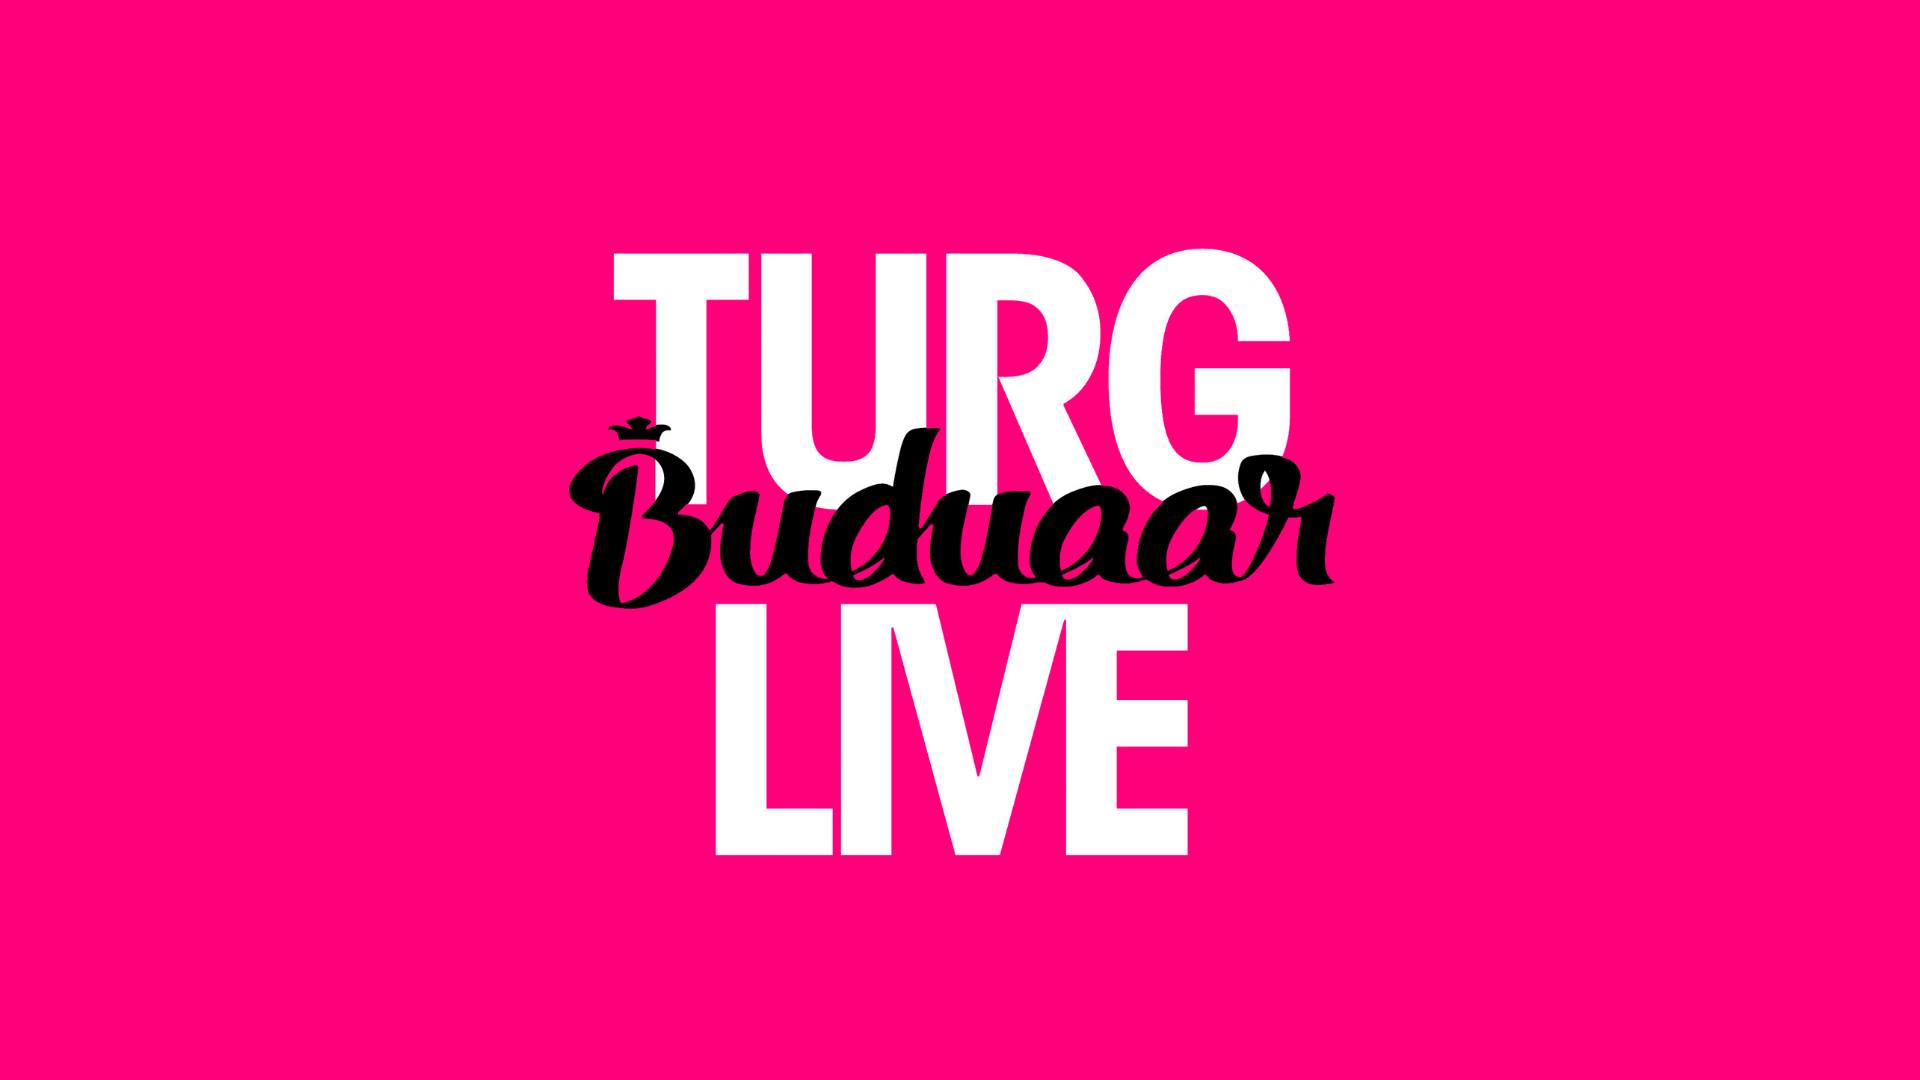 8799Buduaari turg LIVE Tallinn